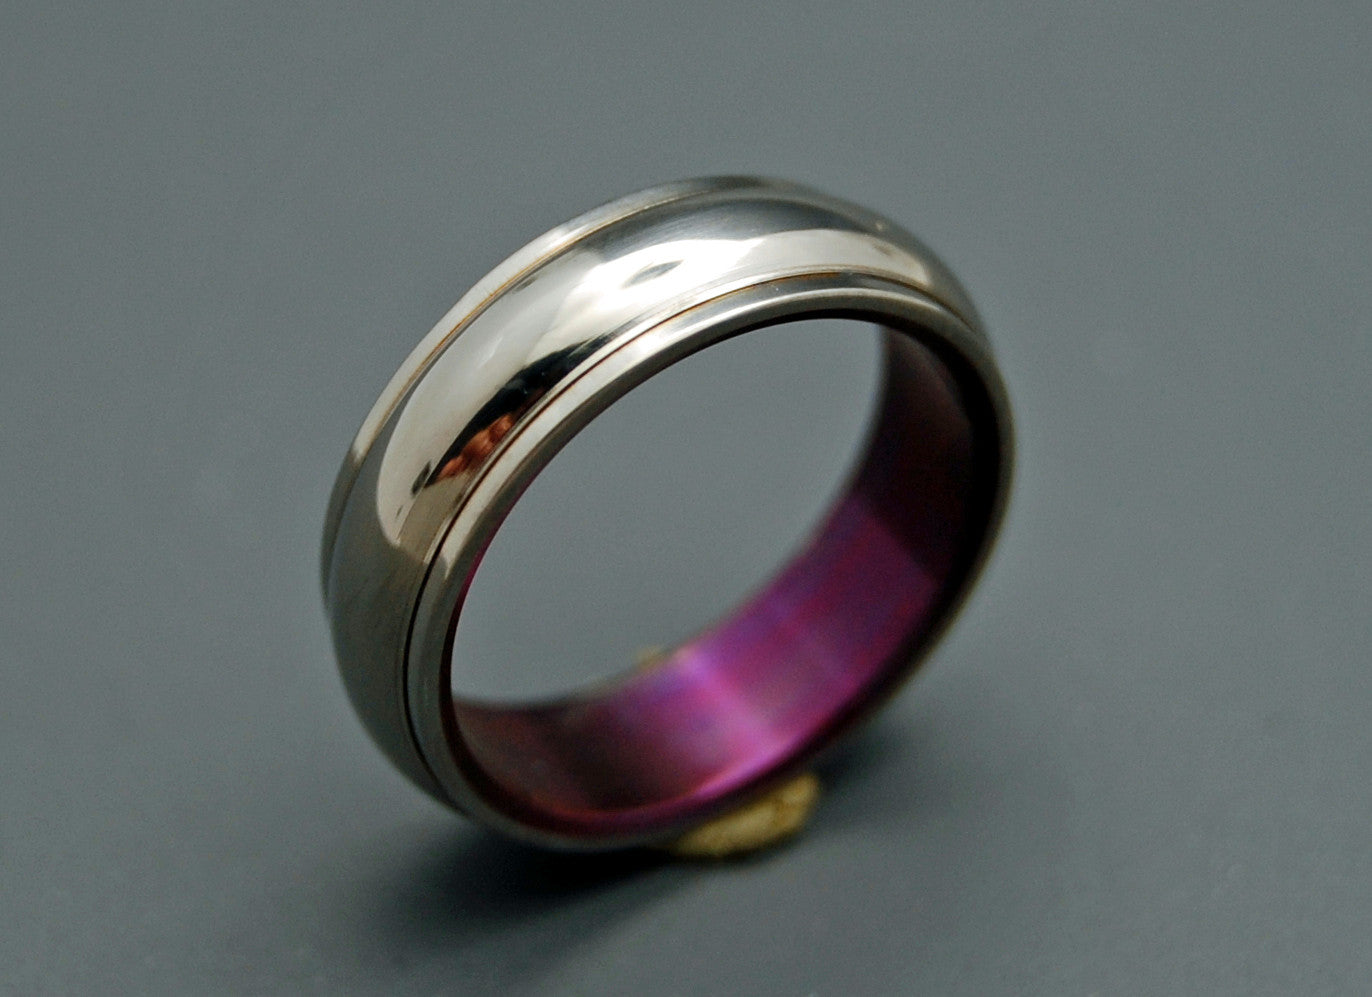 LOVE'S GIFT | Purple Titanium Wedding Rings - Unique Wedding Rings - Minter and Richter Designs